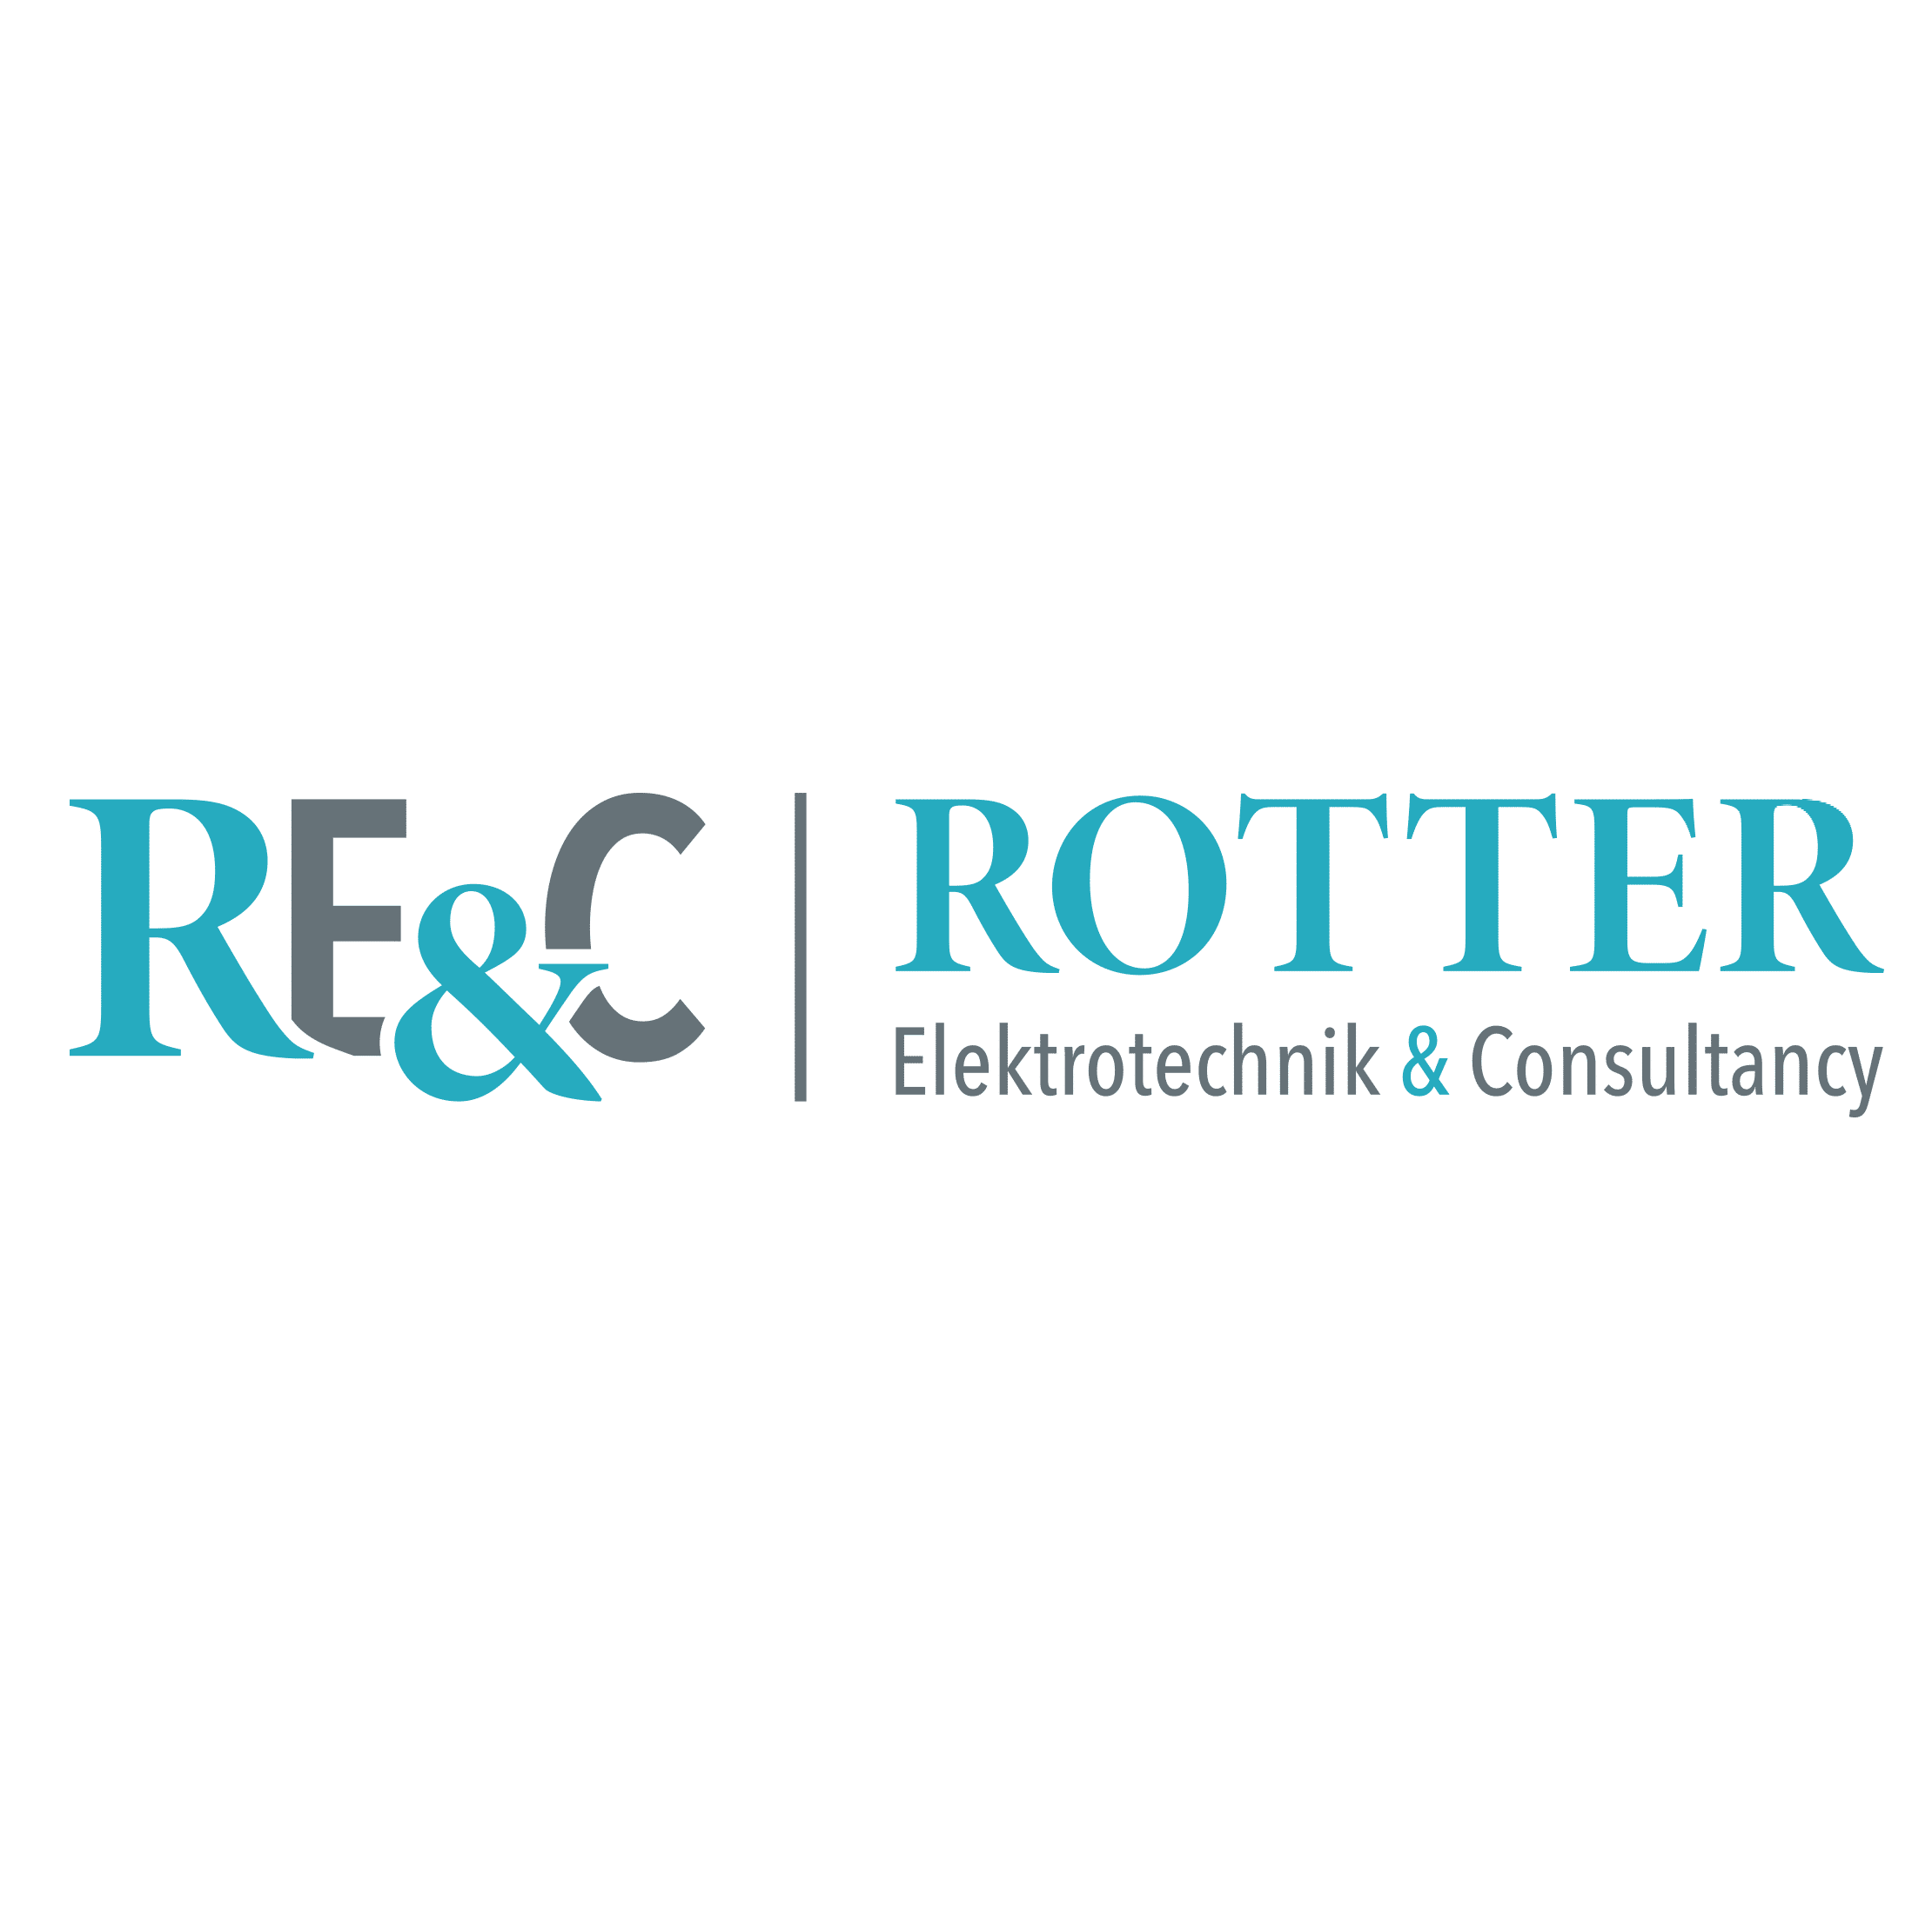 Rotter Elektrotechnik und Consultancy